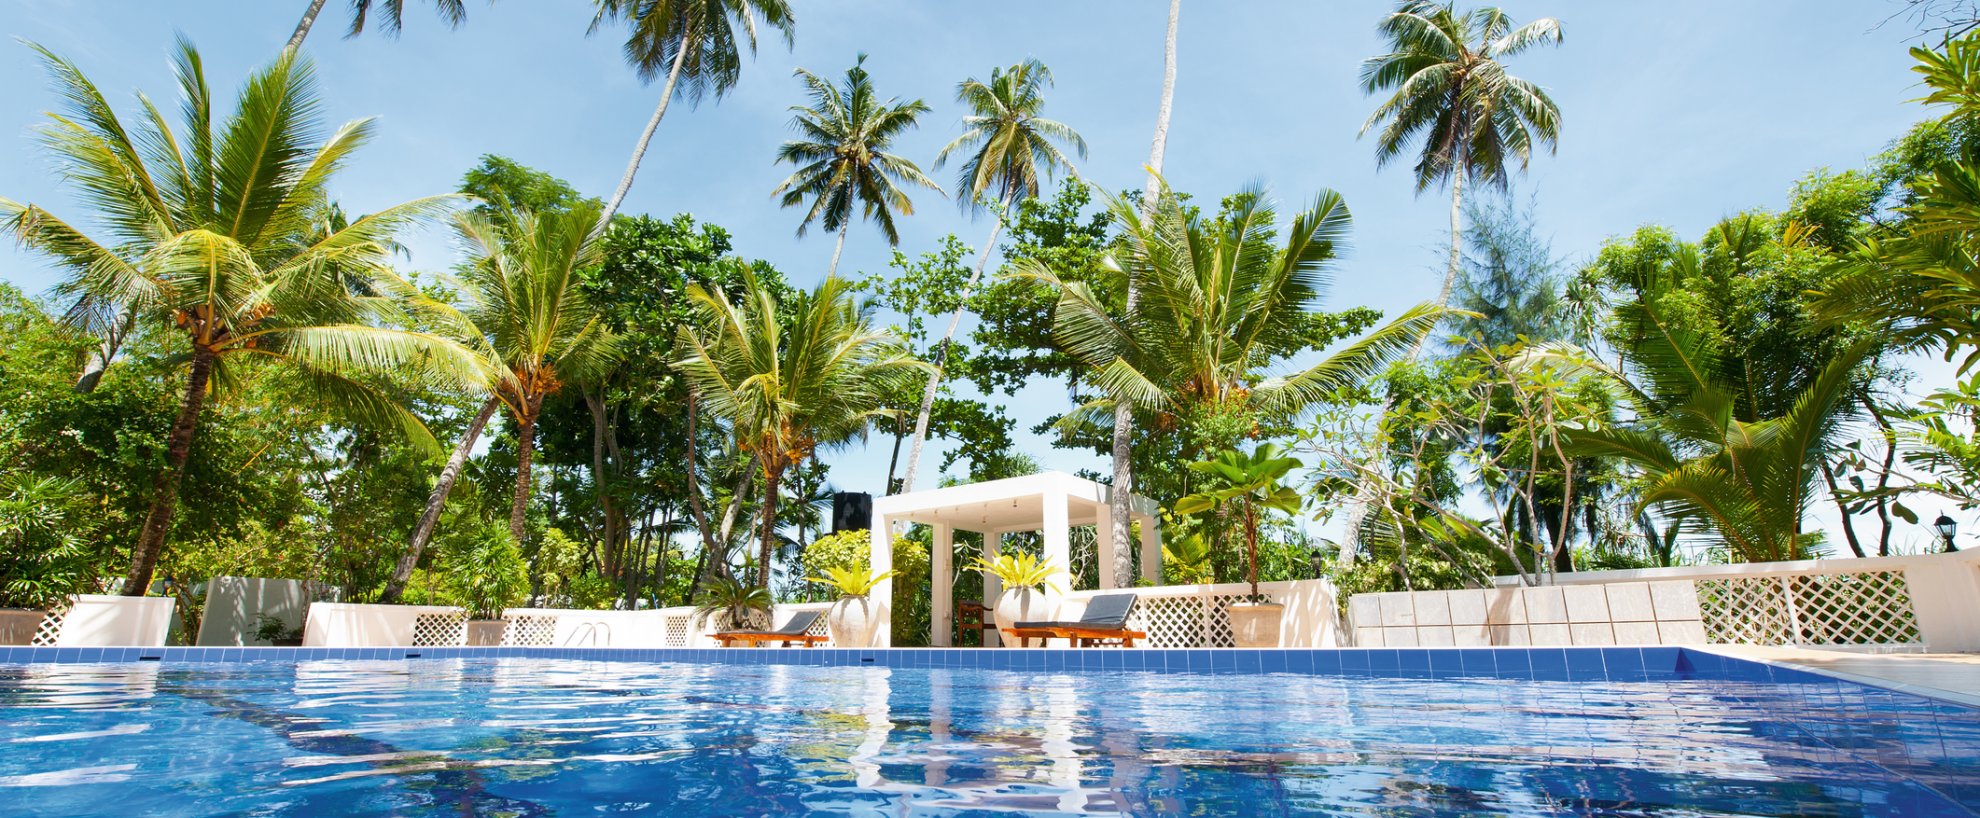 Sri Lanka Surya Lanka Resort Hotel Ayurveda Kuren Pool Swimmingpool Schwimmbad